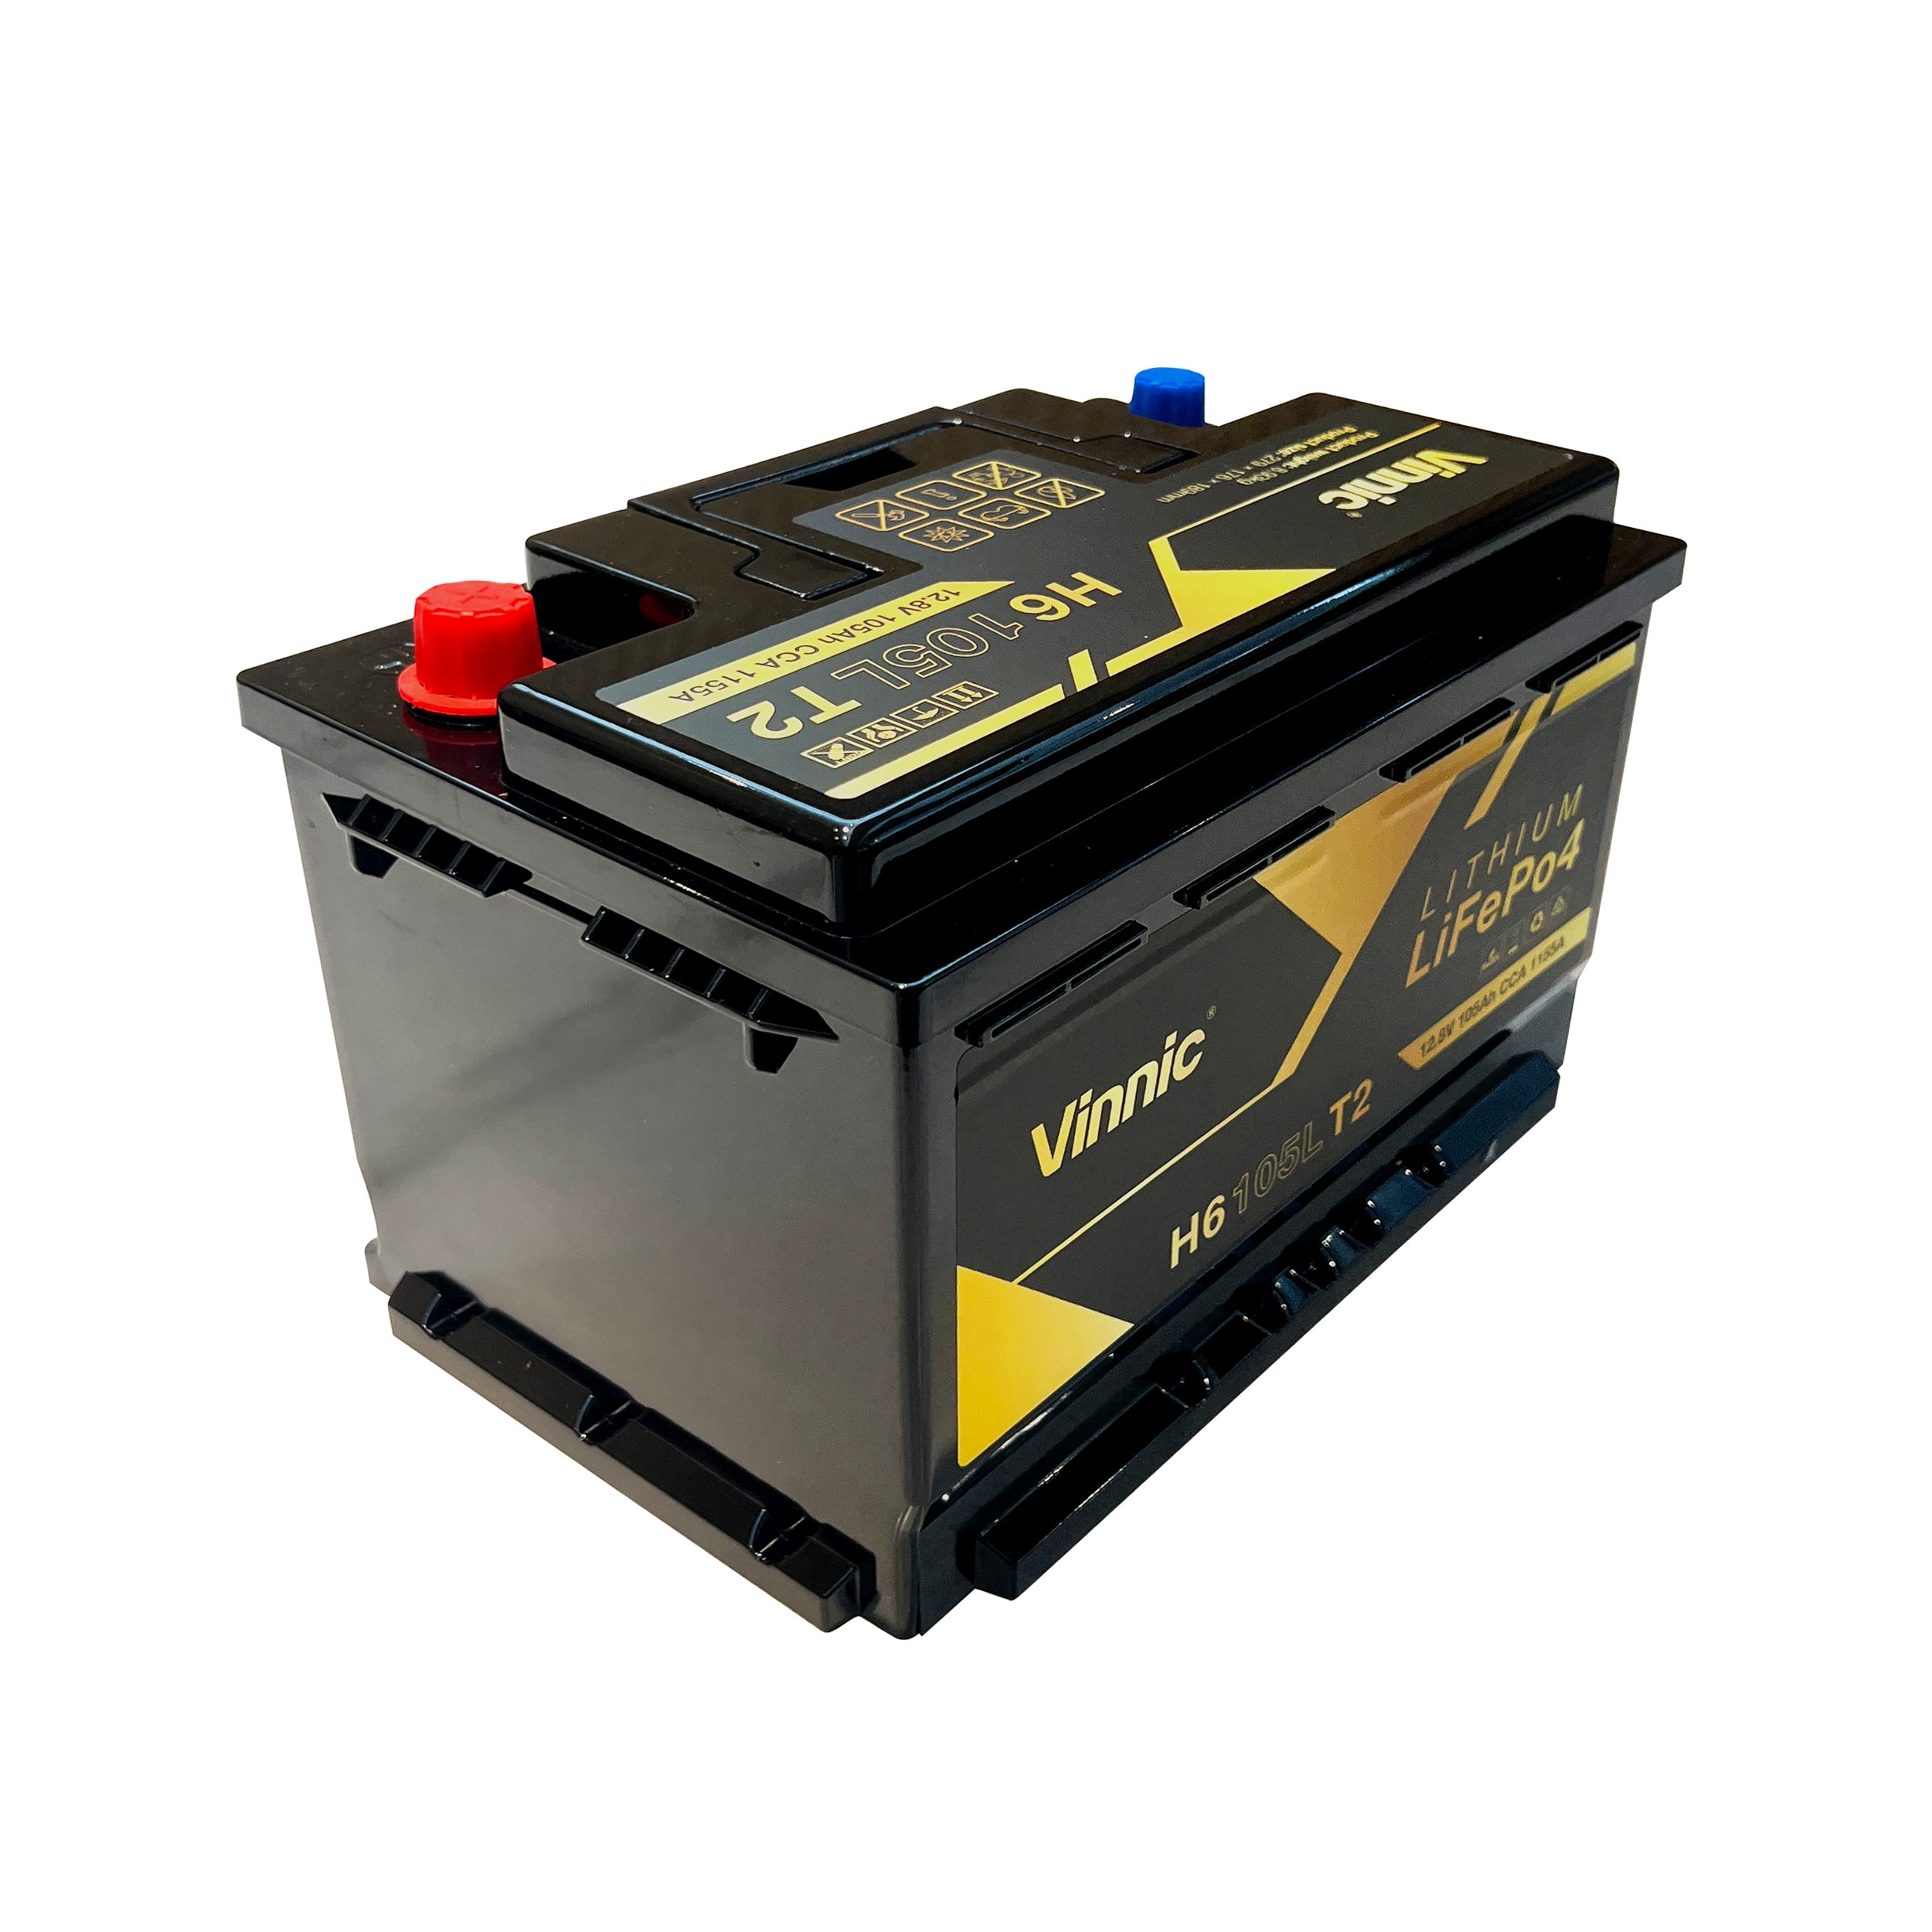 Vinnic LiFePO4 Batteries (LFP)